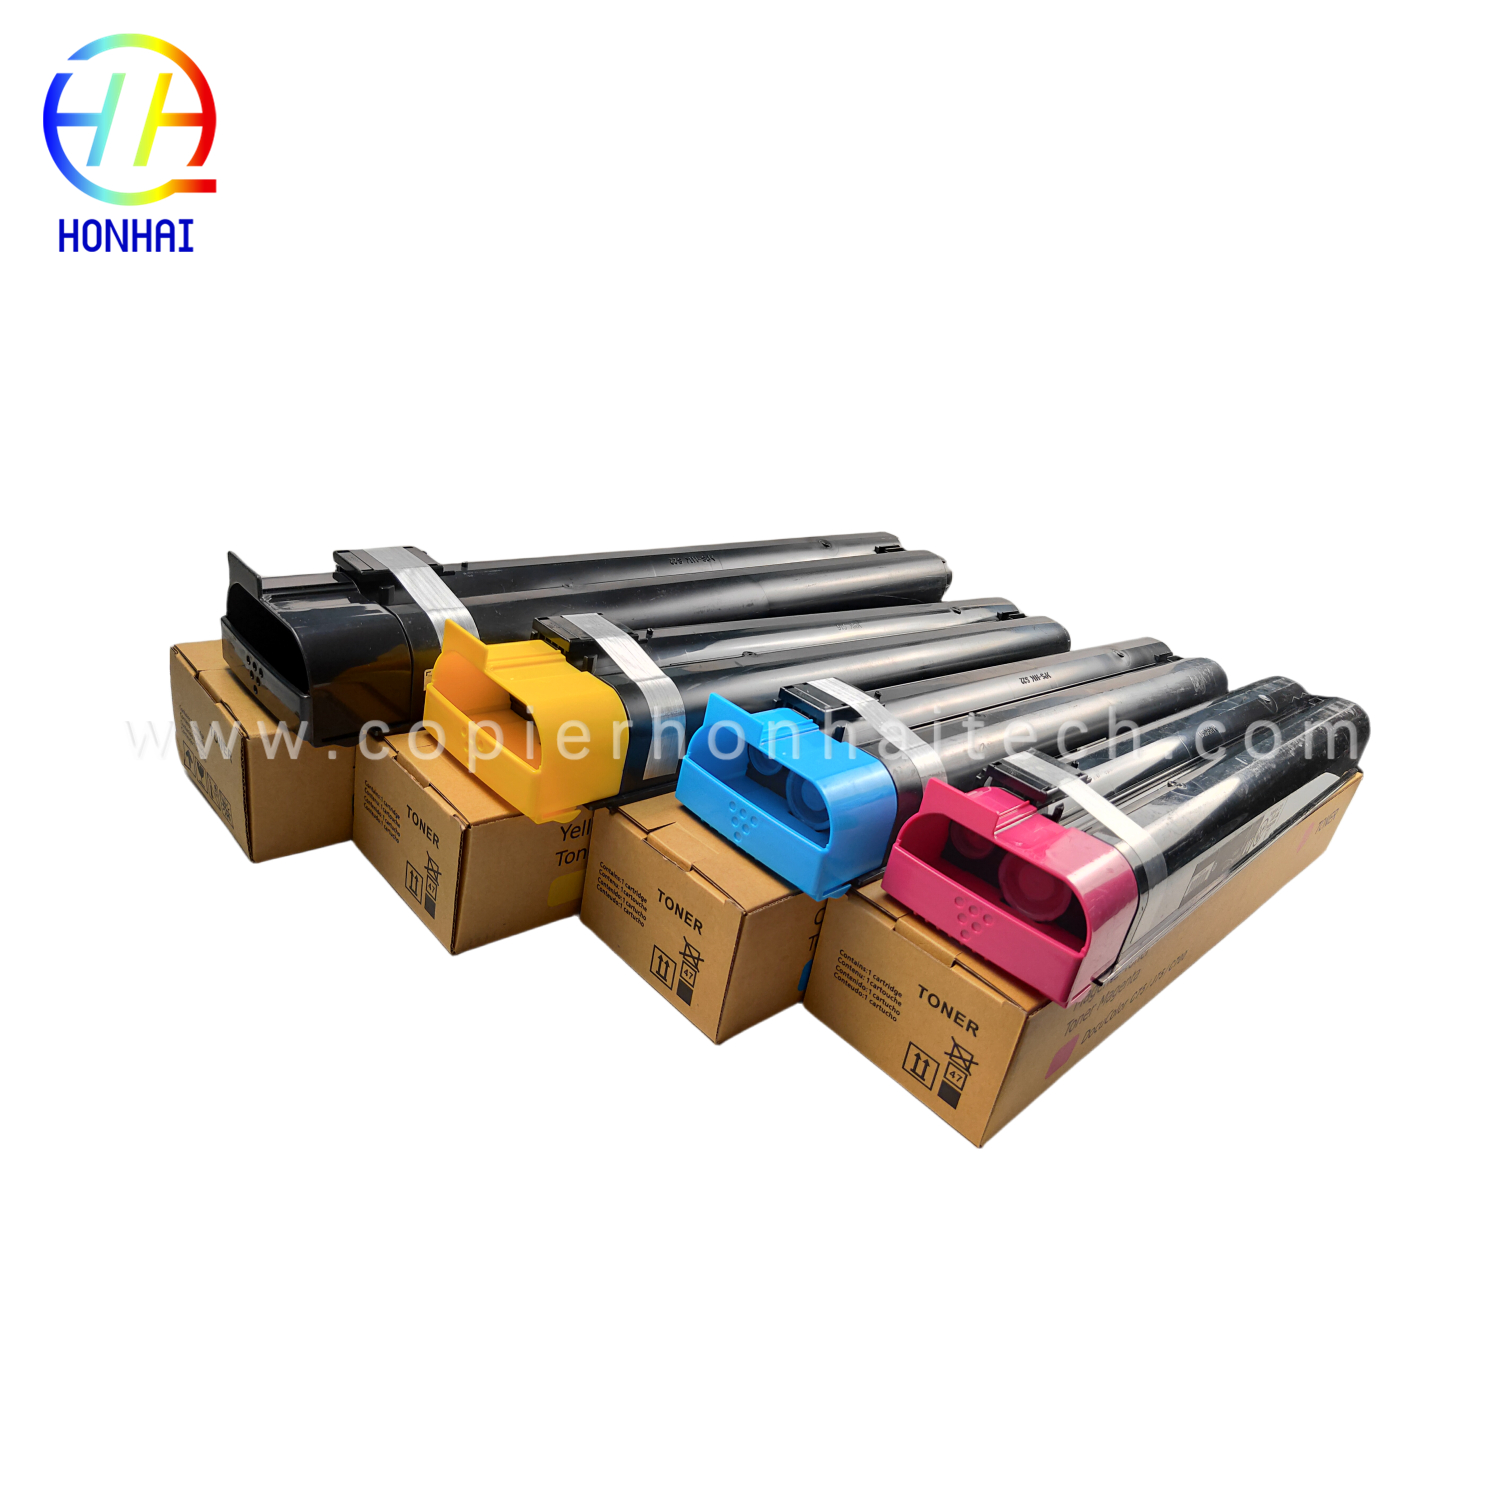 https://www.copierhonhaitech.com/toner-cartridge-for-xerox-700i-770-color-c75-press.